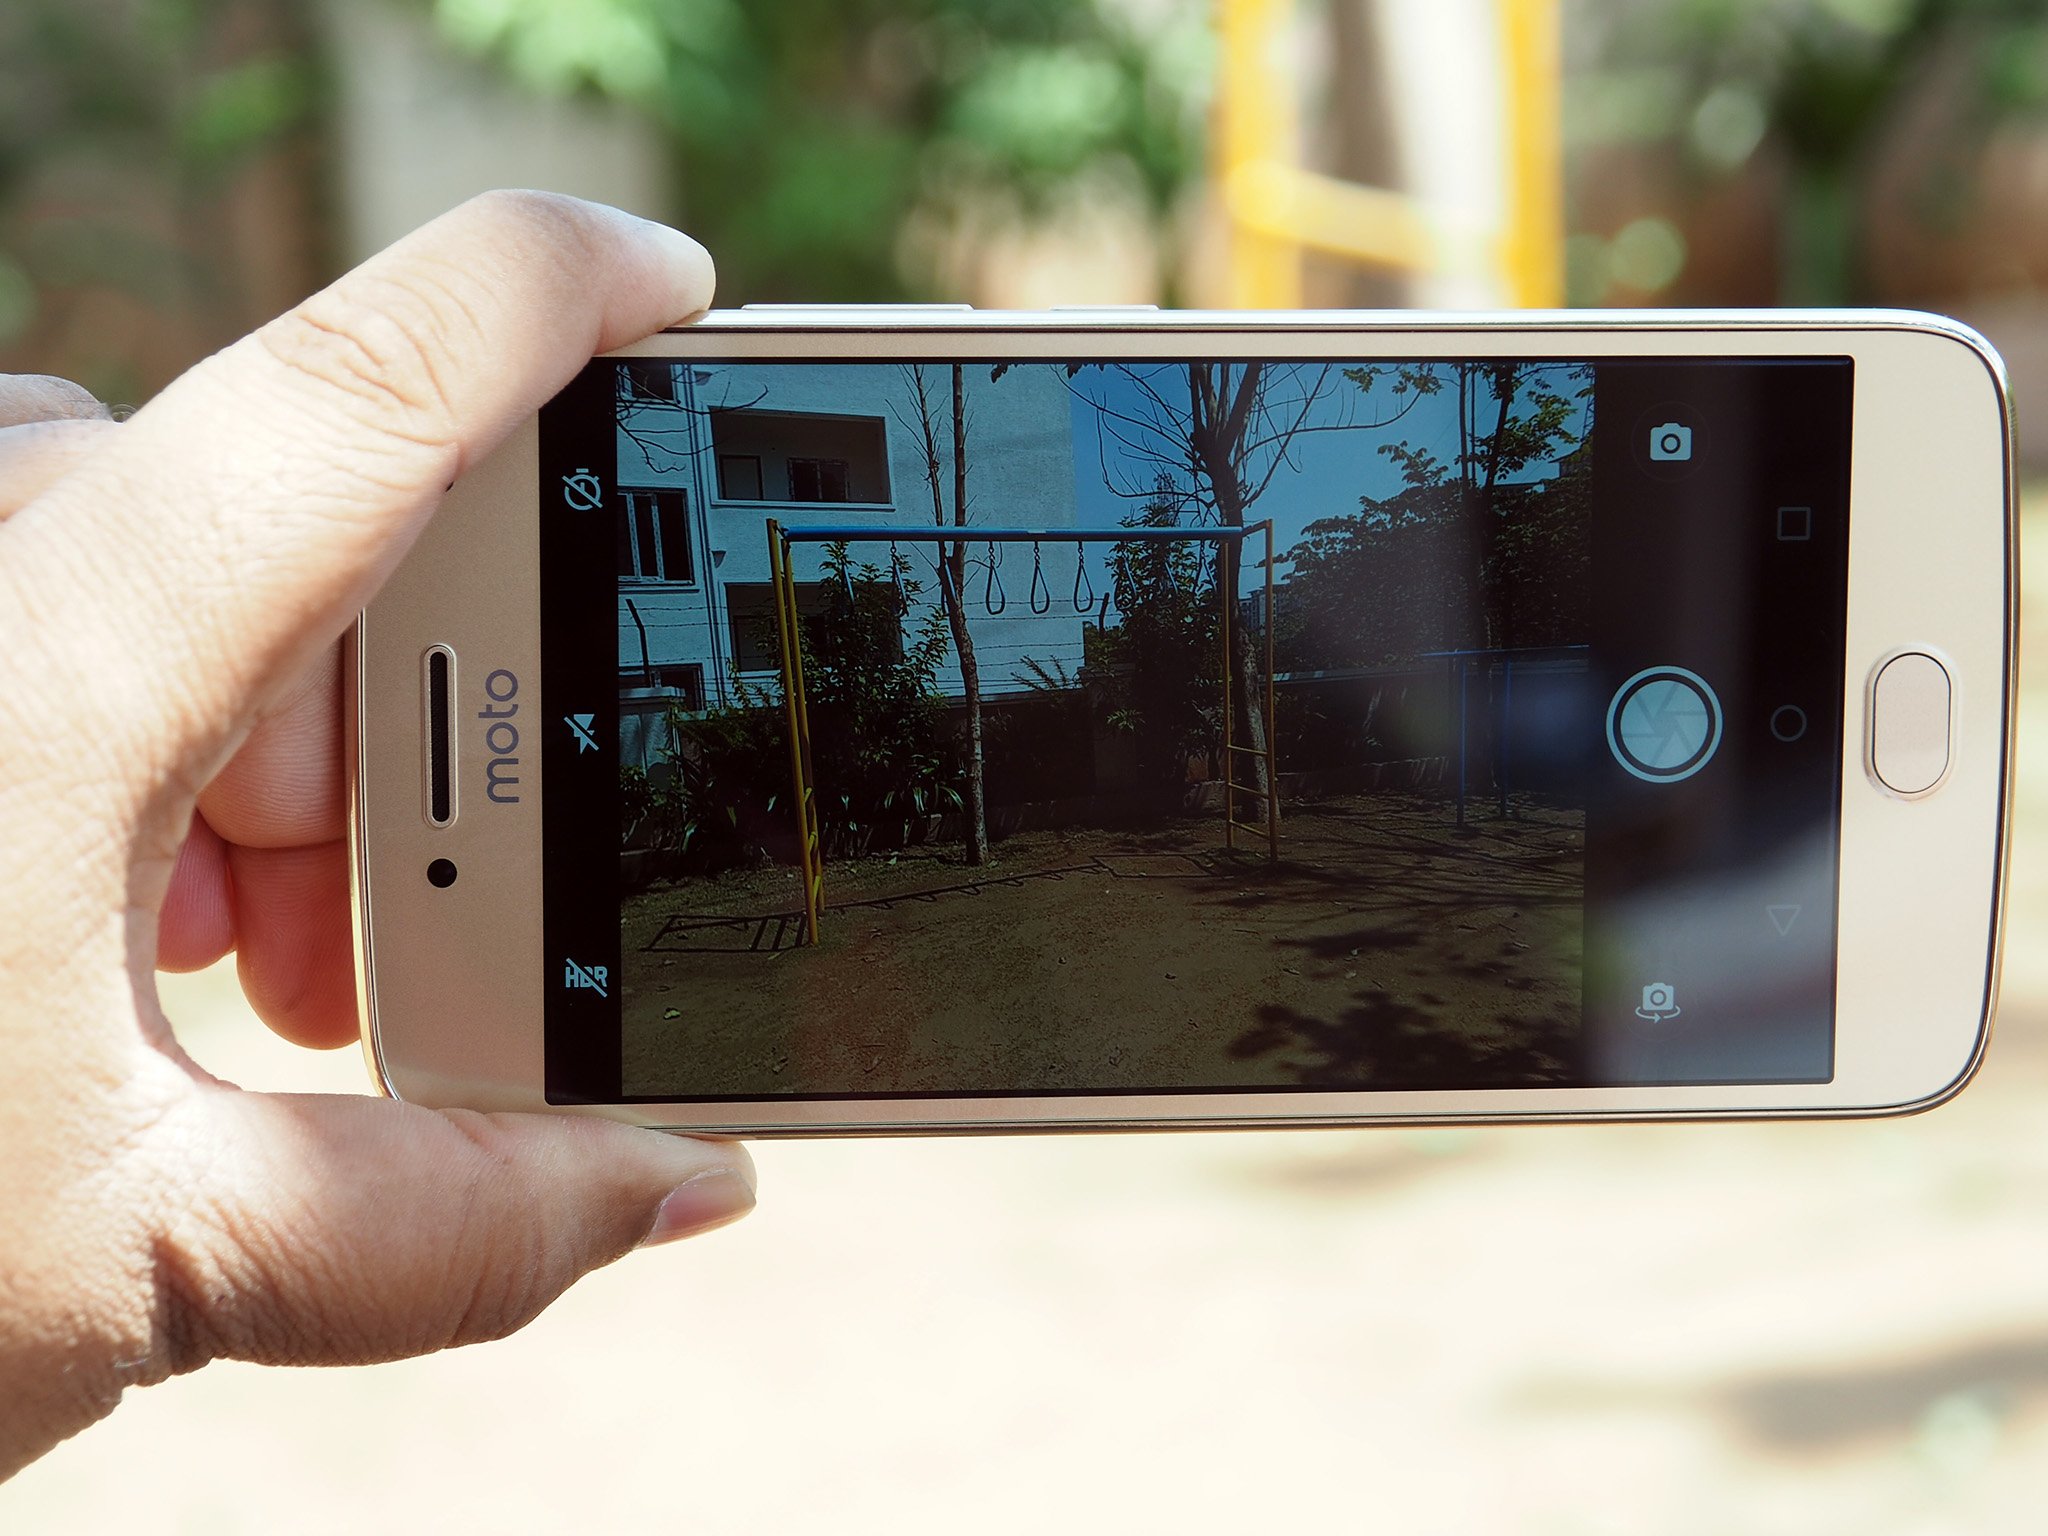 Moto G5 Plus camera interface